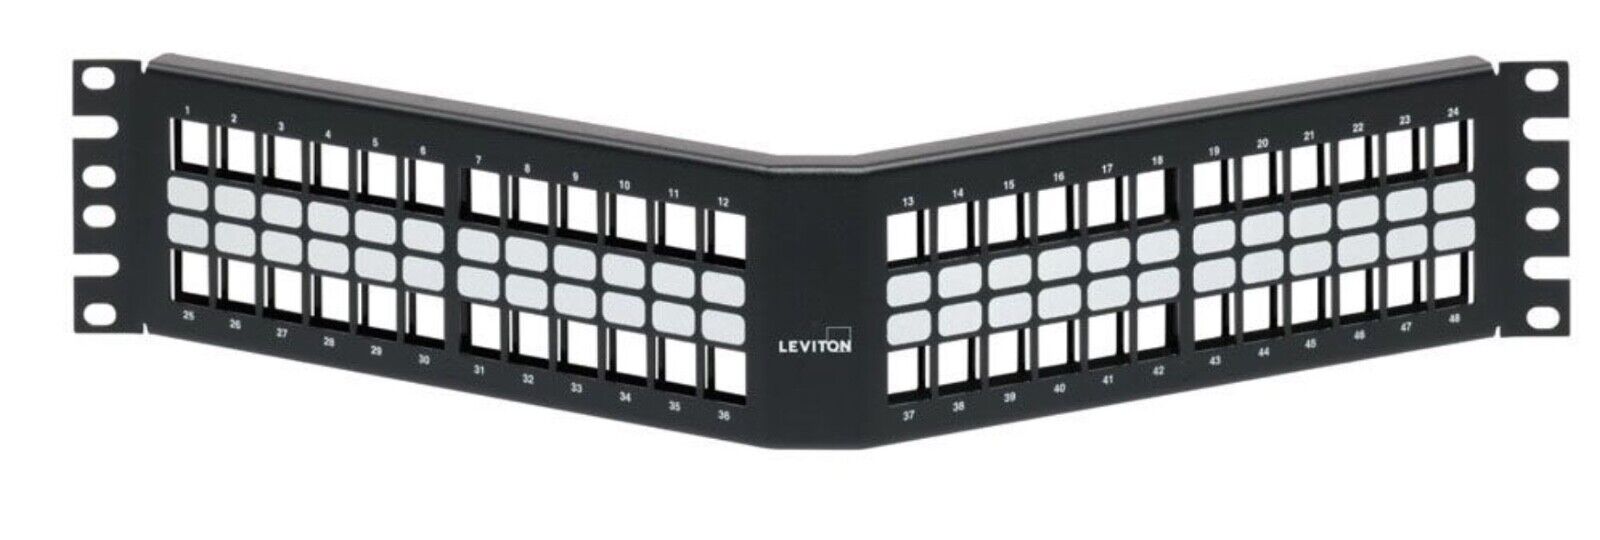 Leviton 49256-H48 QuickPort Modular Angled RackMount Patch Panel 48-Port 2RU new